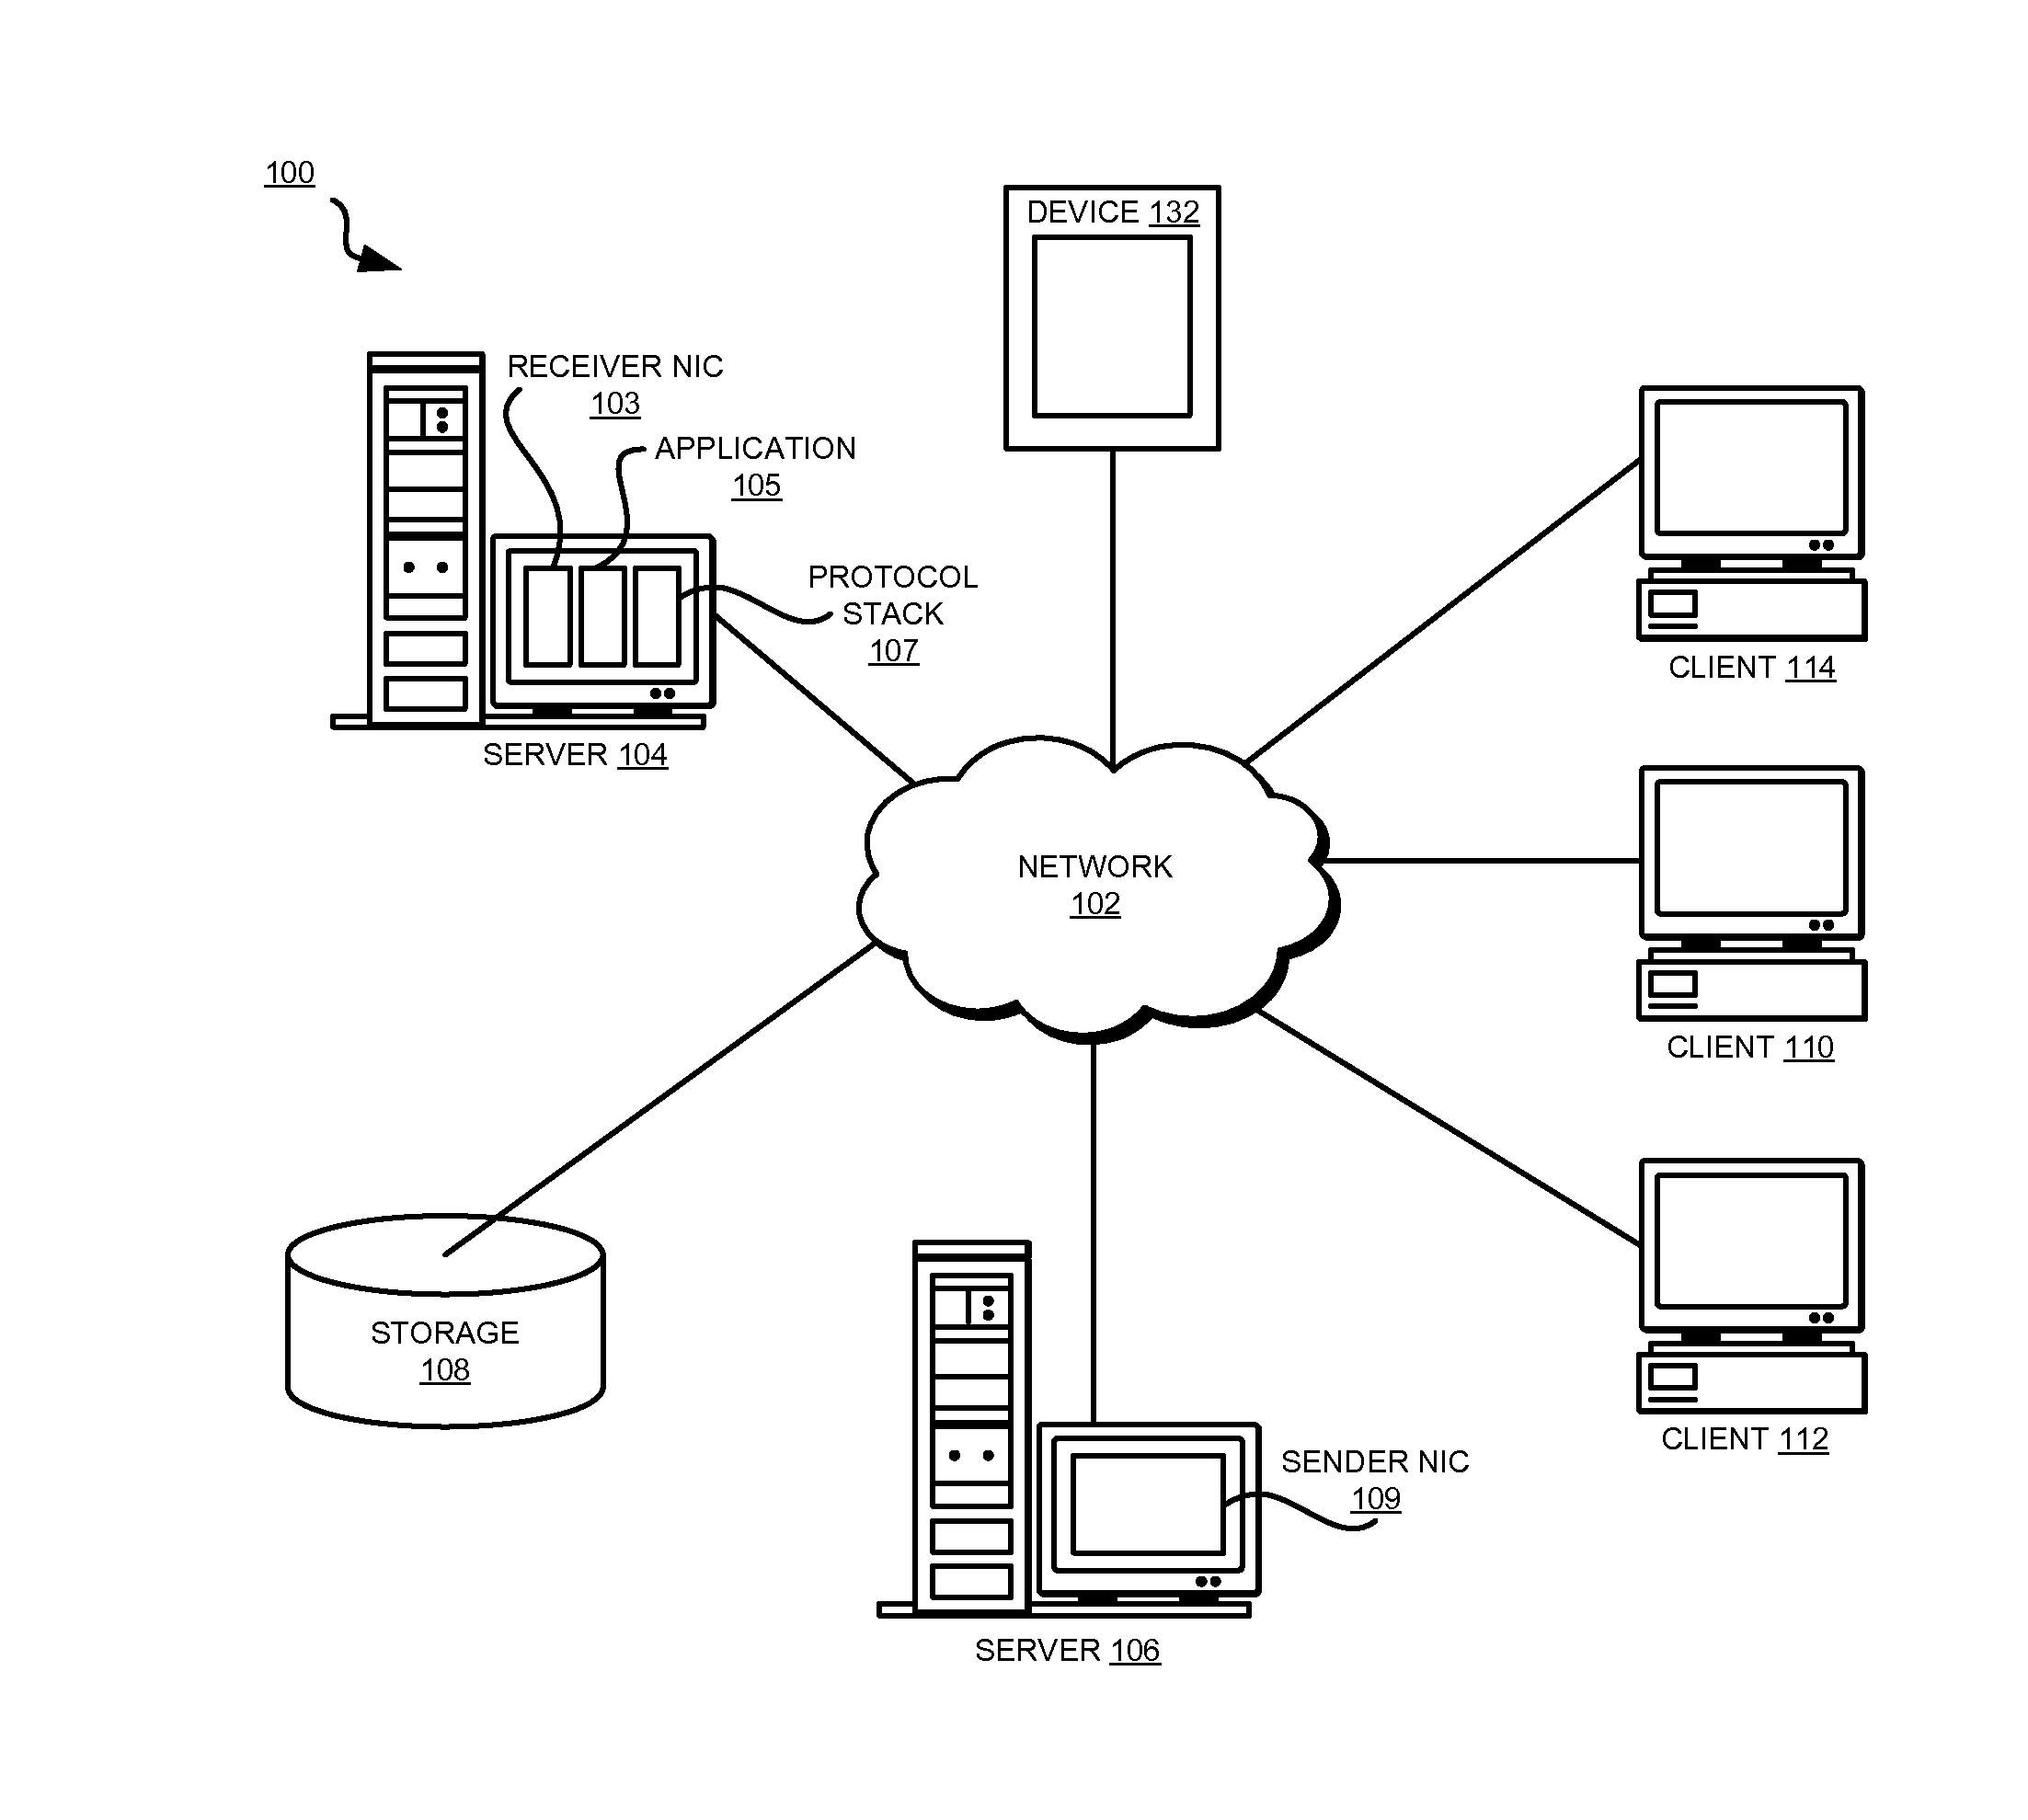 Handling packet reordering at a network adapter